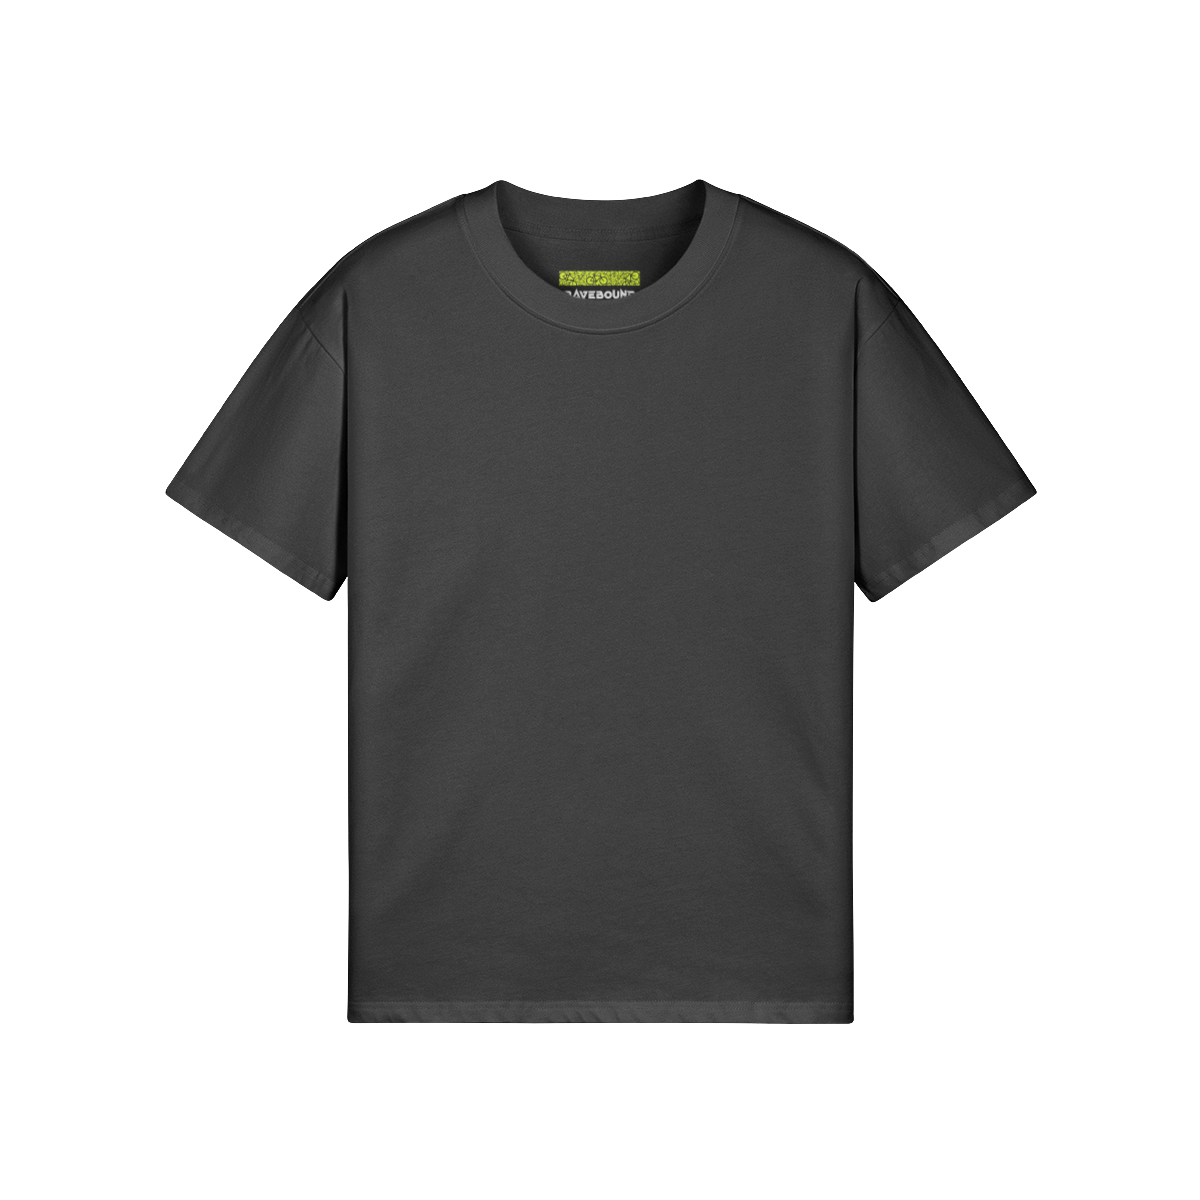 BUTTERFLY EFFECT (BACK PRINT) - Unisex Oversized T-shirt - black